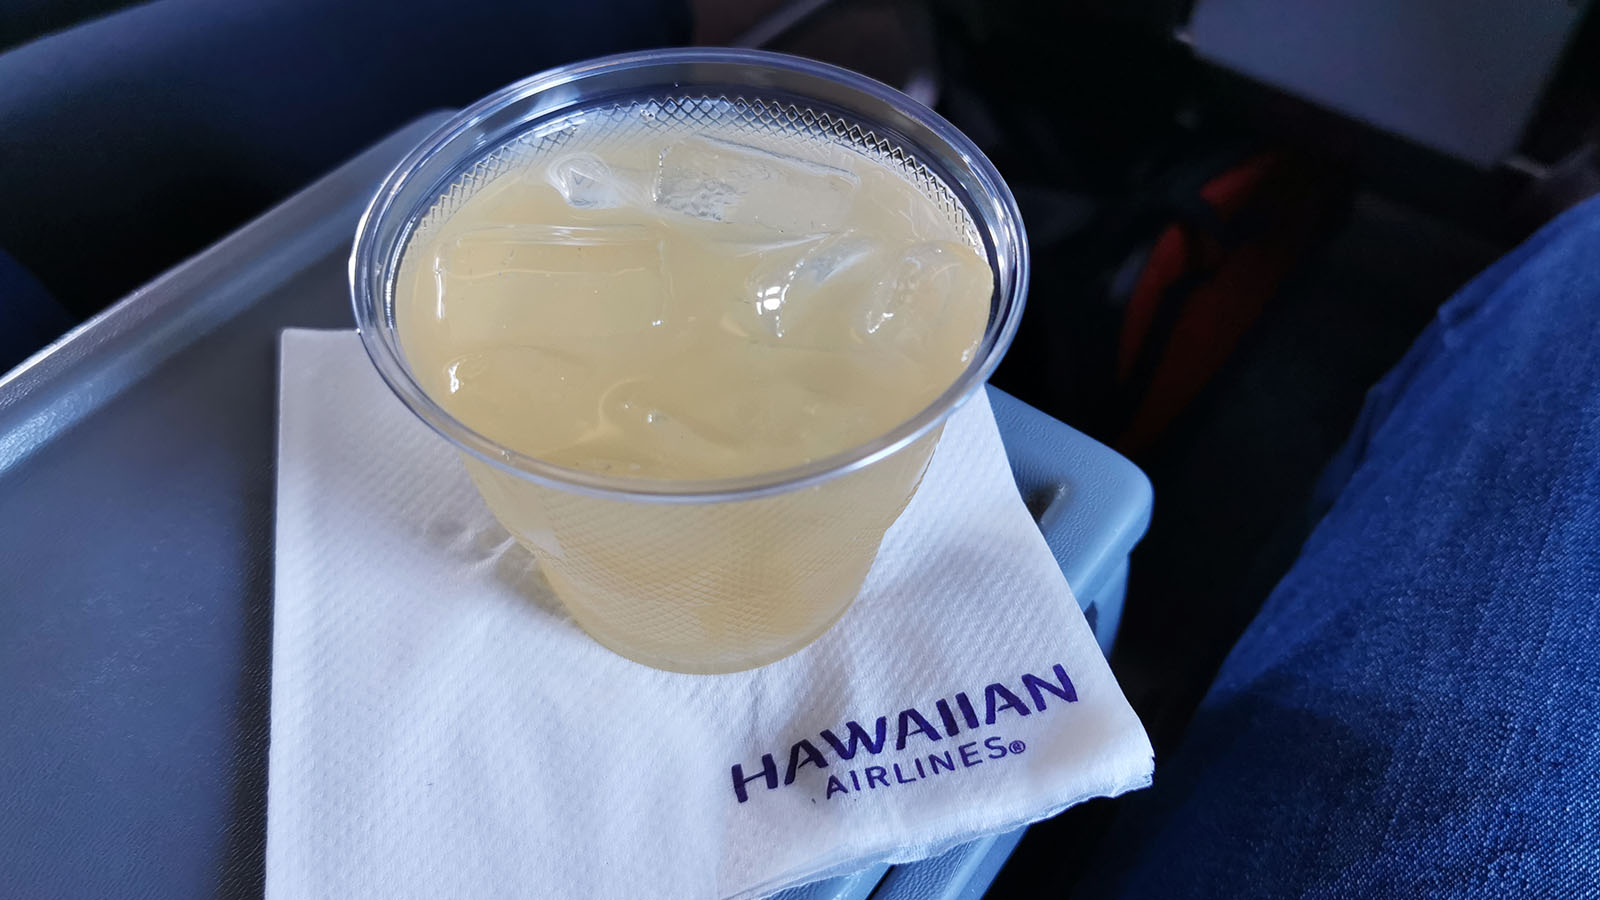 Alcoholic refreshment on Hawaiian Airlines